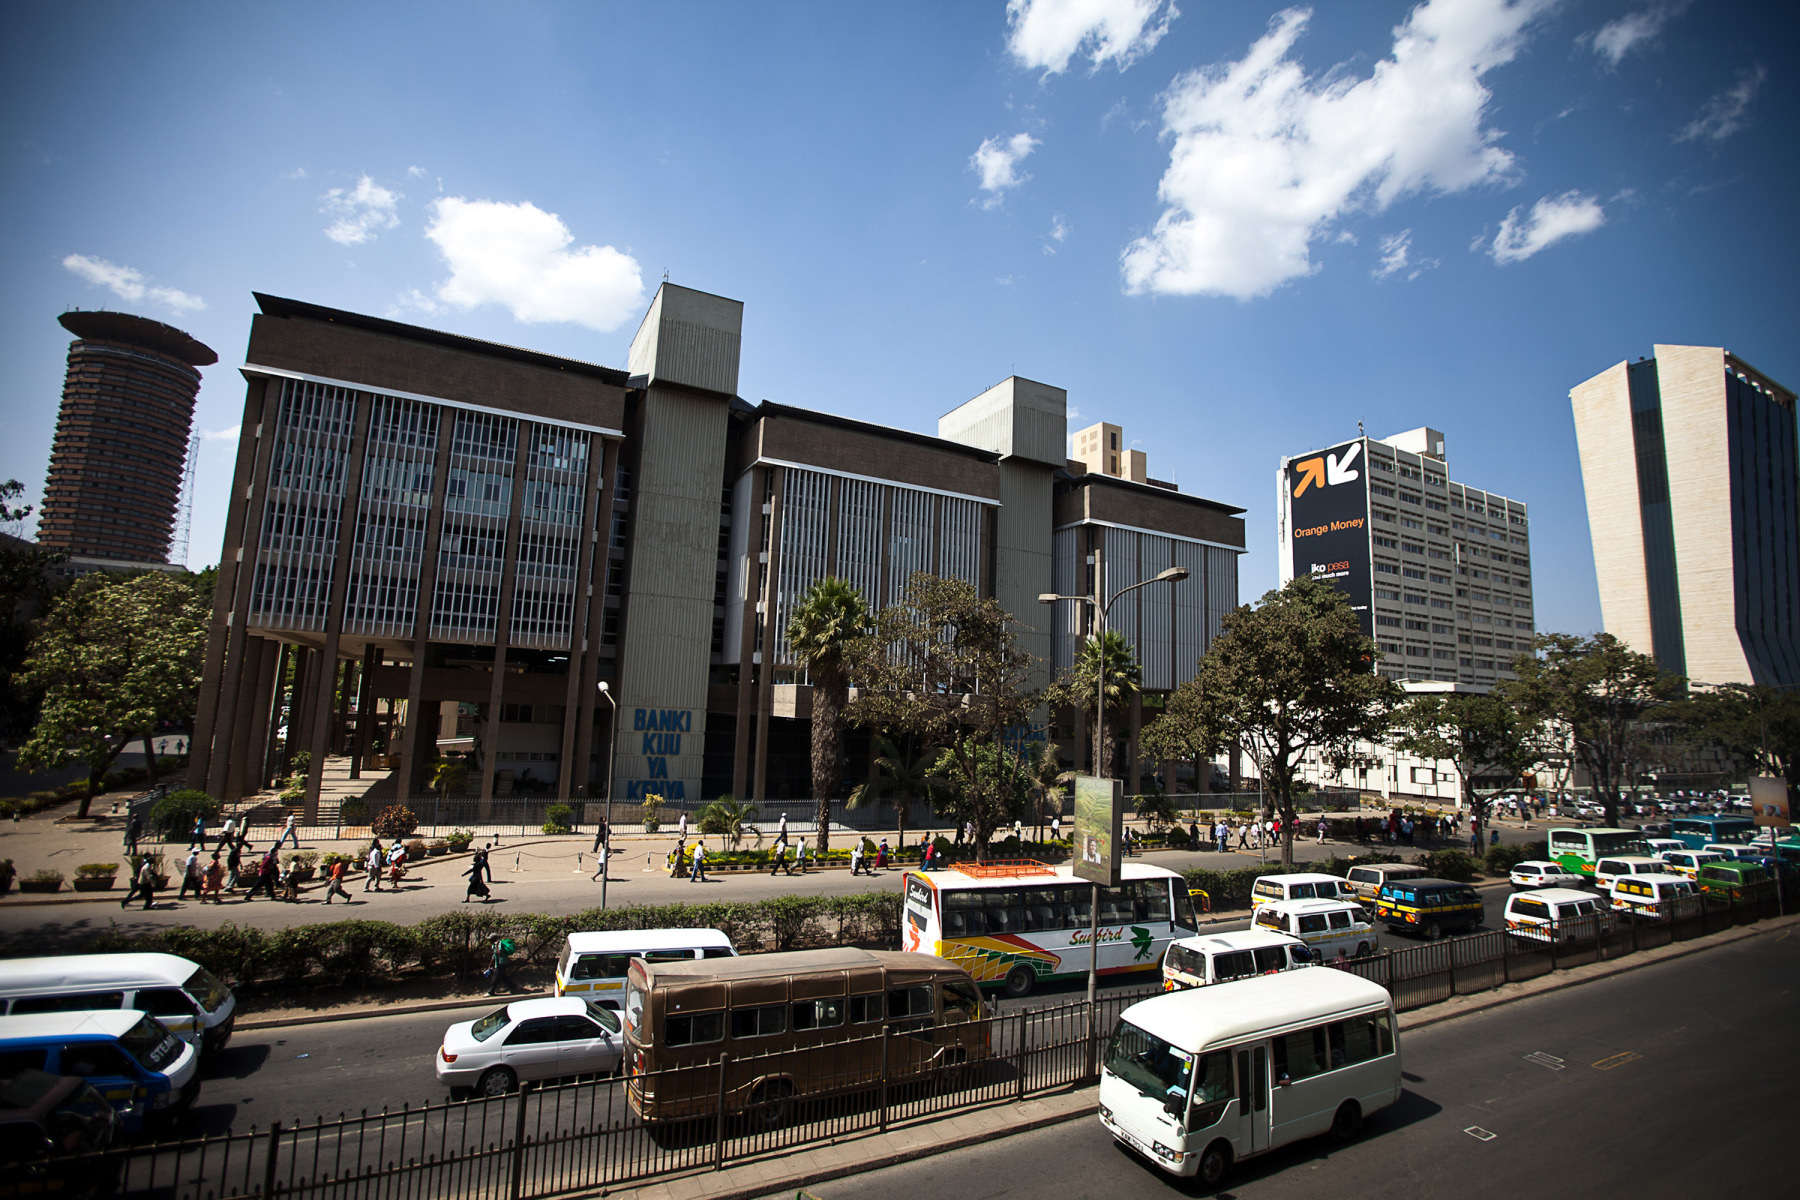 The Kenyan central bank in Nairobi.